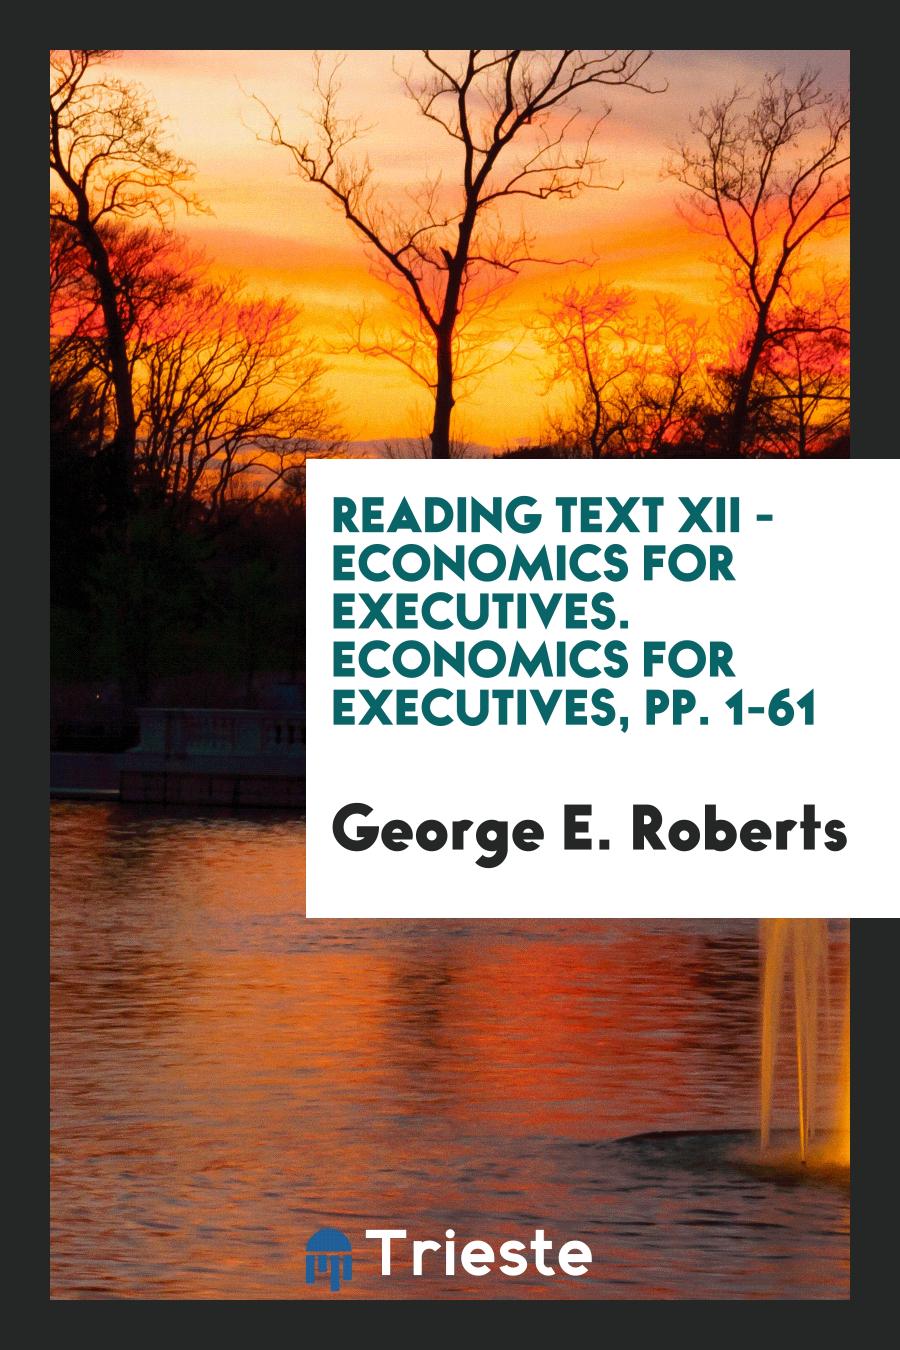 Reading text XII - economics for executives. Economics for Executives, pp. 1-61